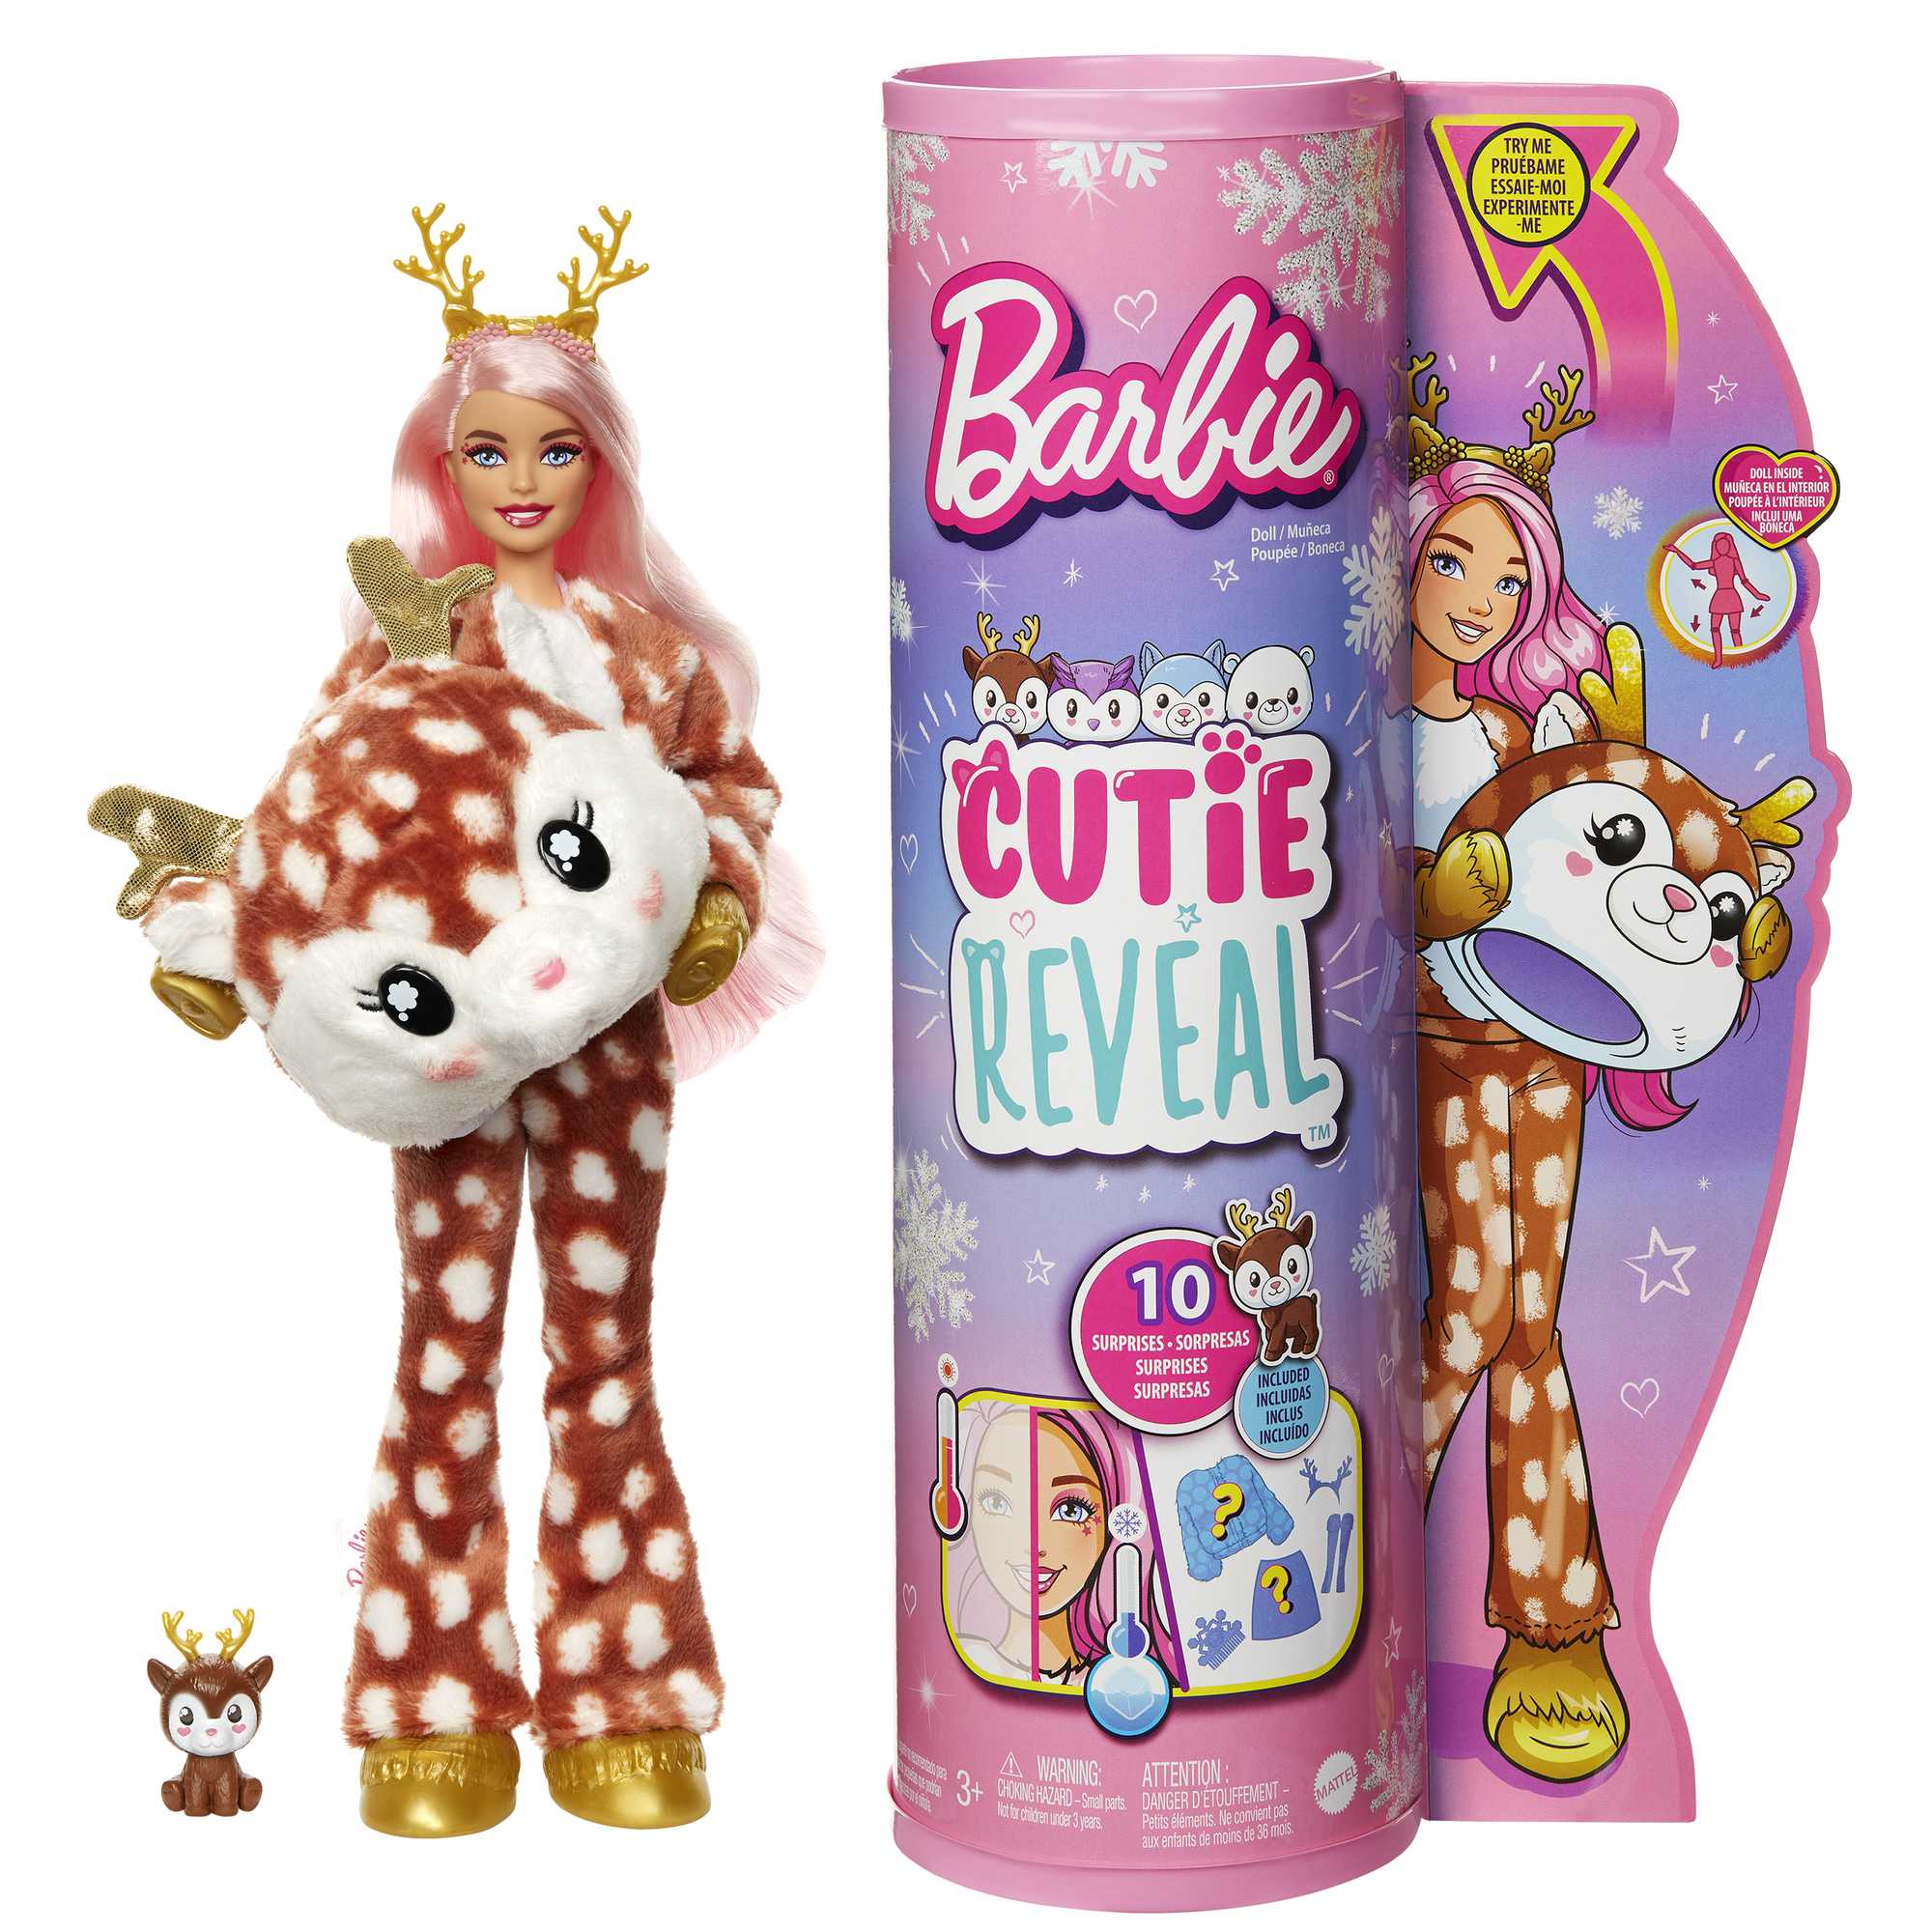 Muñeca Barbie Cutie Reveal Chelsea, muñeca con disfraz de tucán de